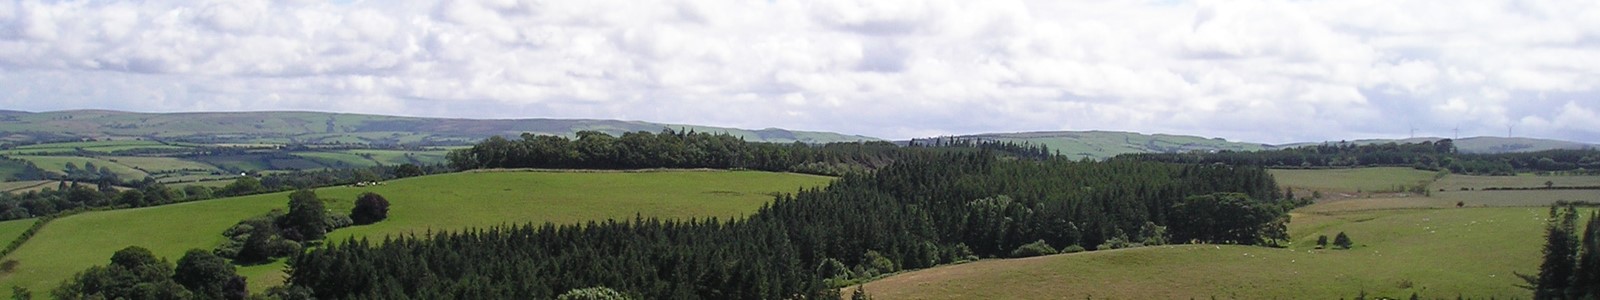 Farm landscape with woodland